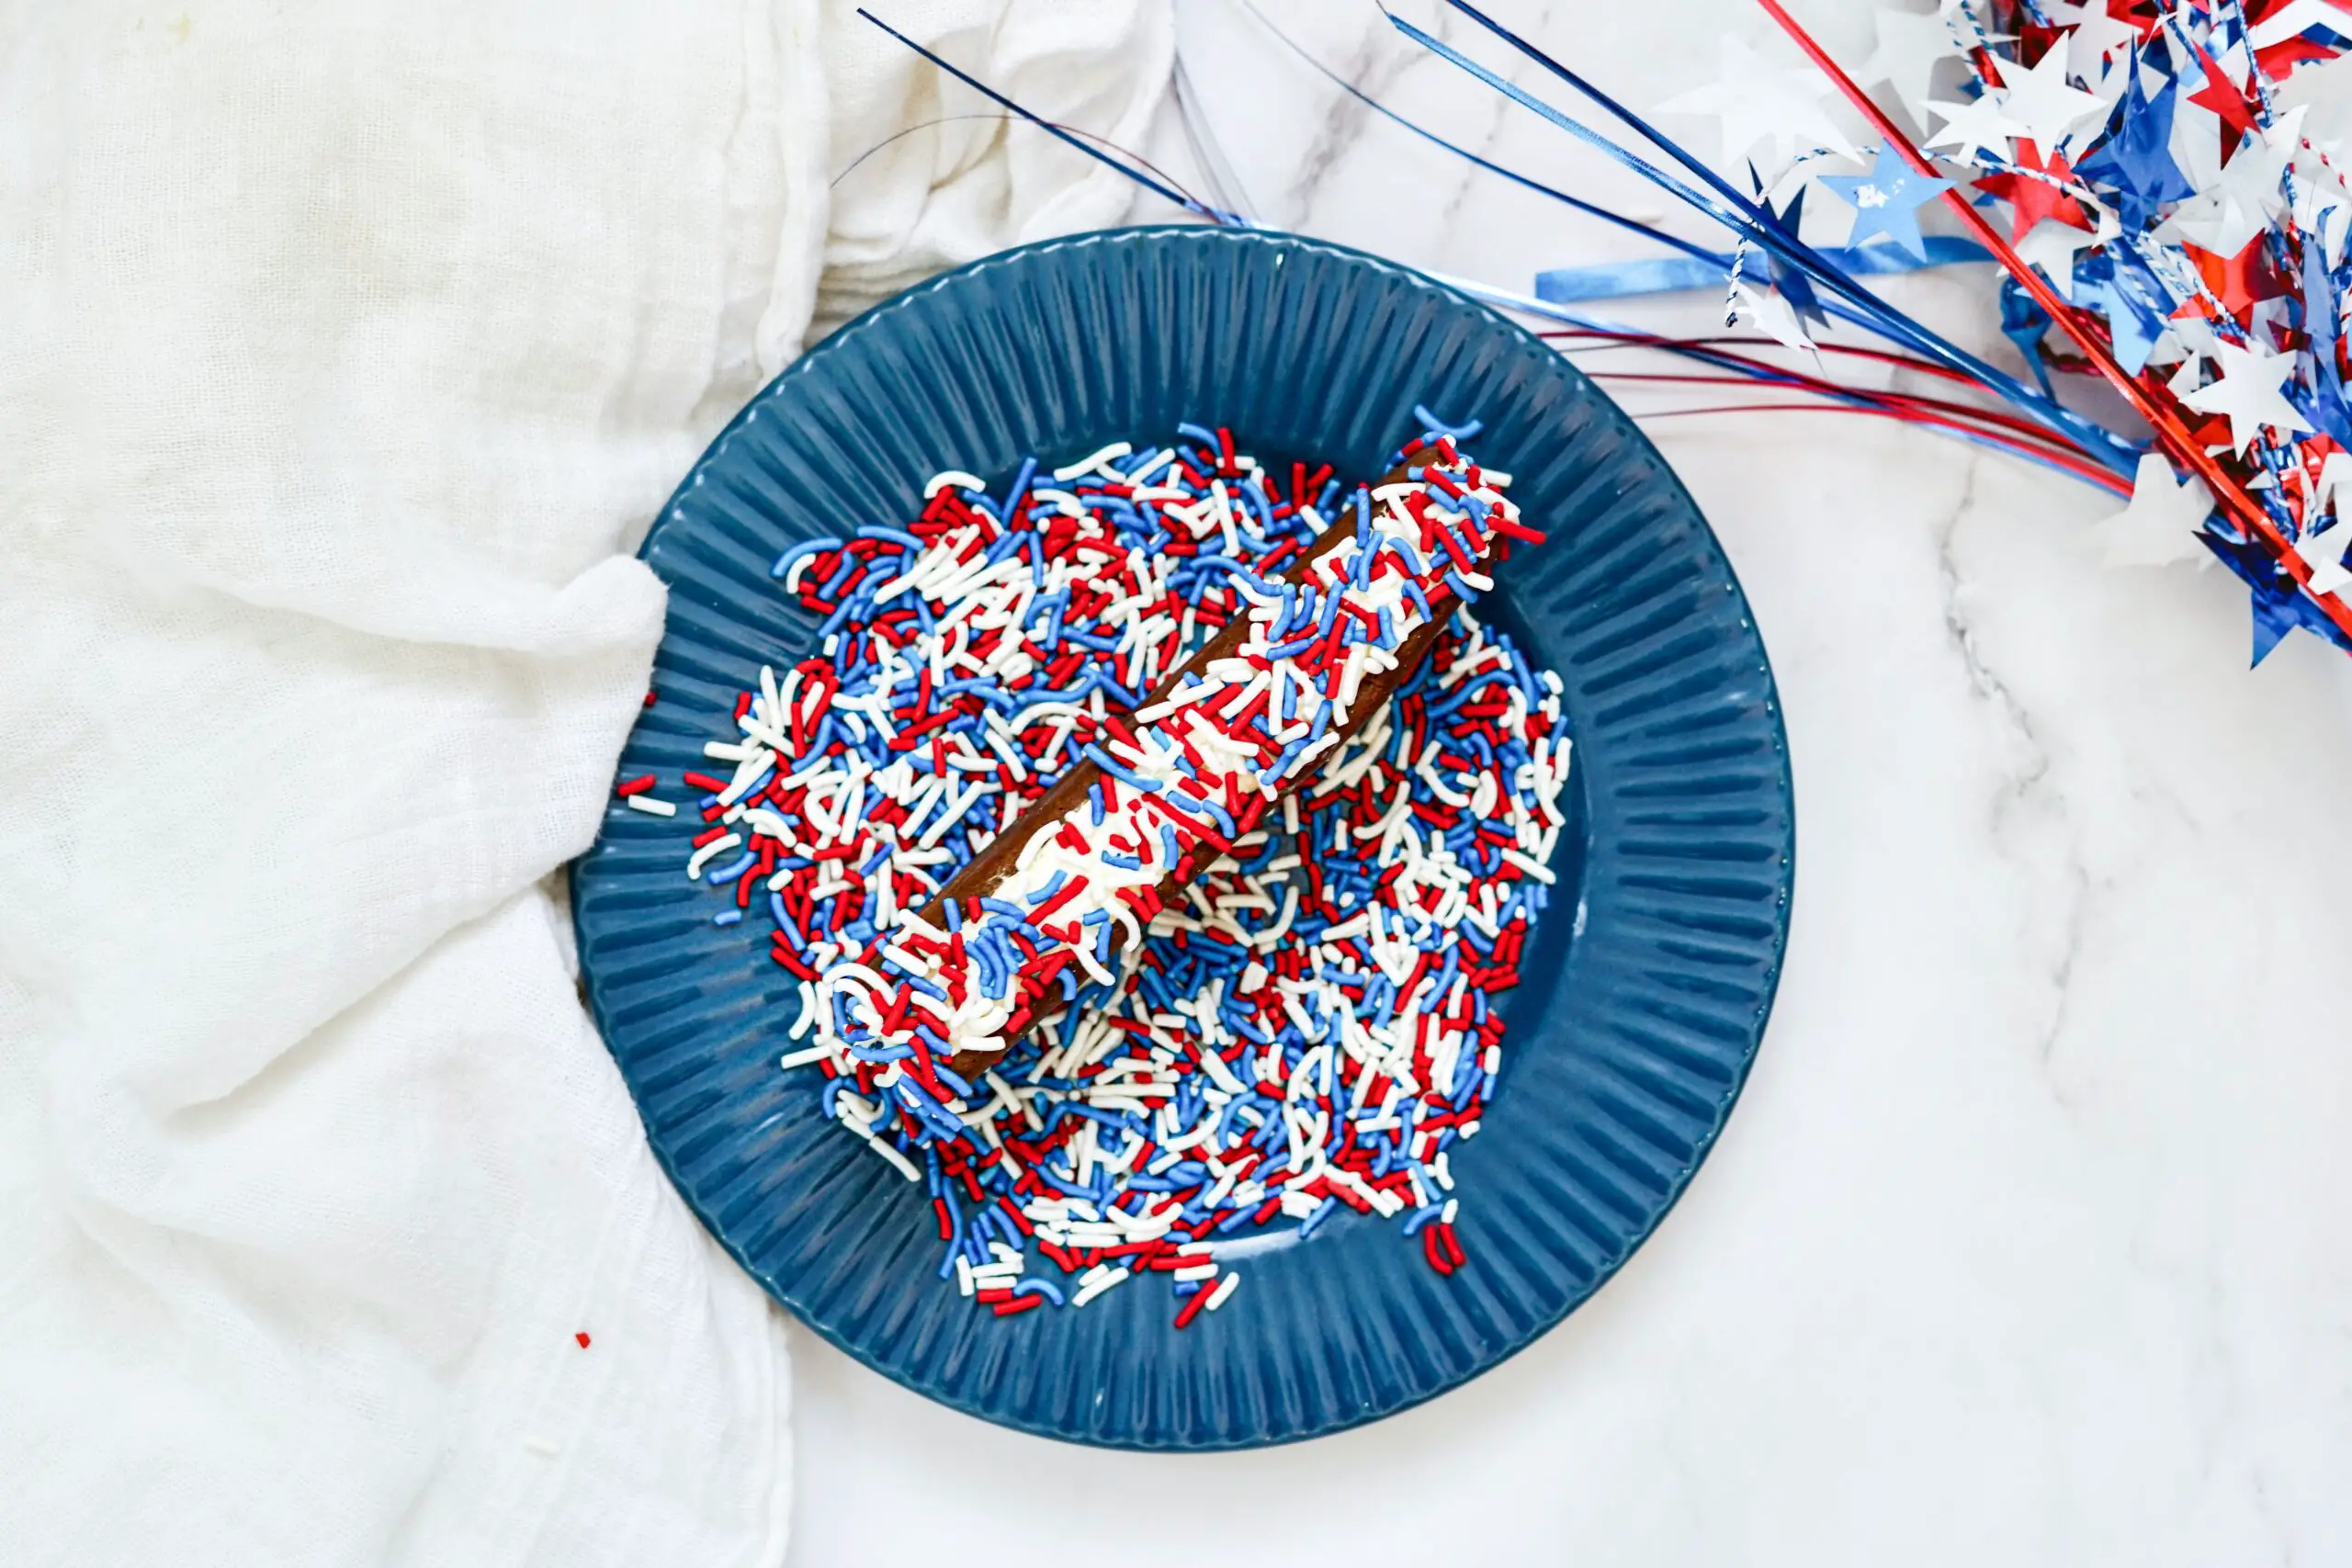 Dip the ice cream sandwich in the patriotic sprinkles.